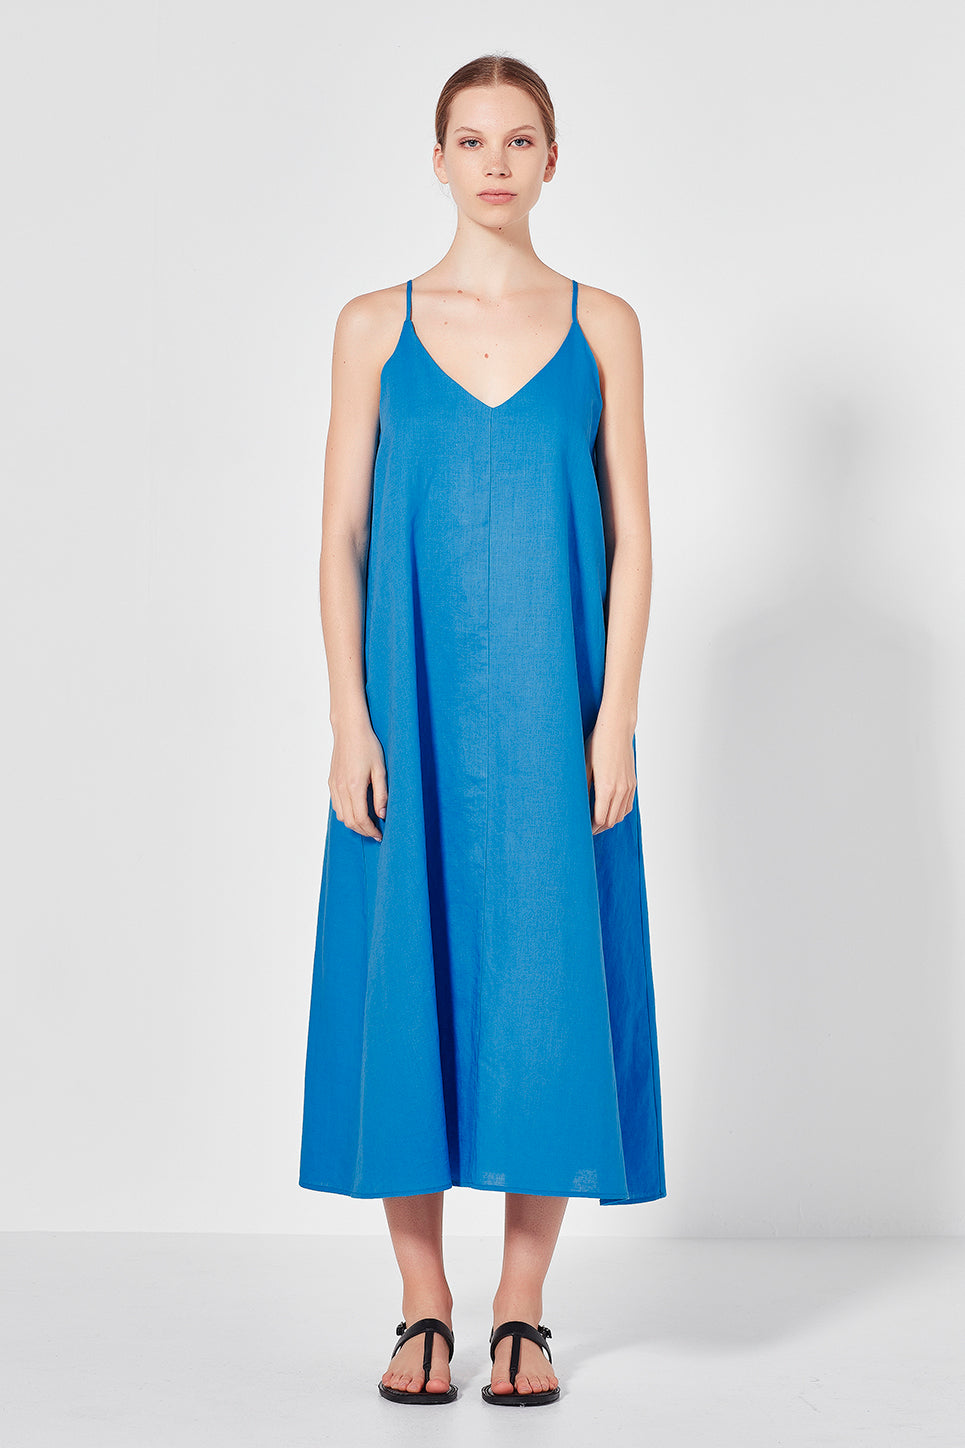 The Marnie 2-Way Sun Dress in Azure